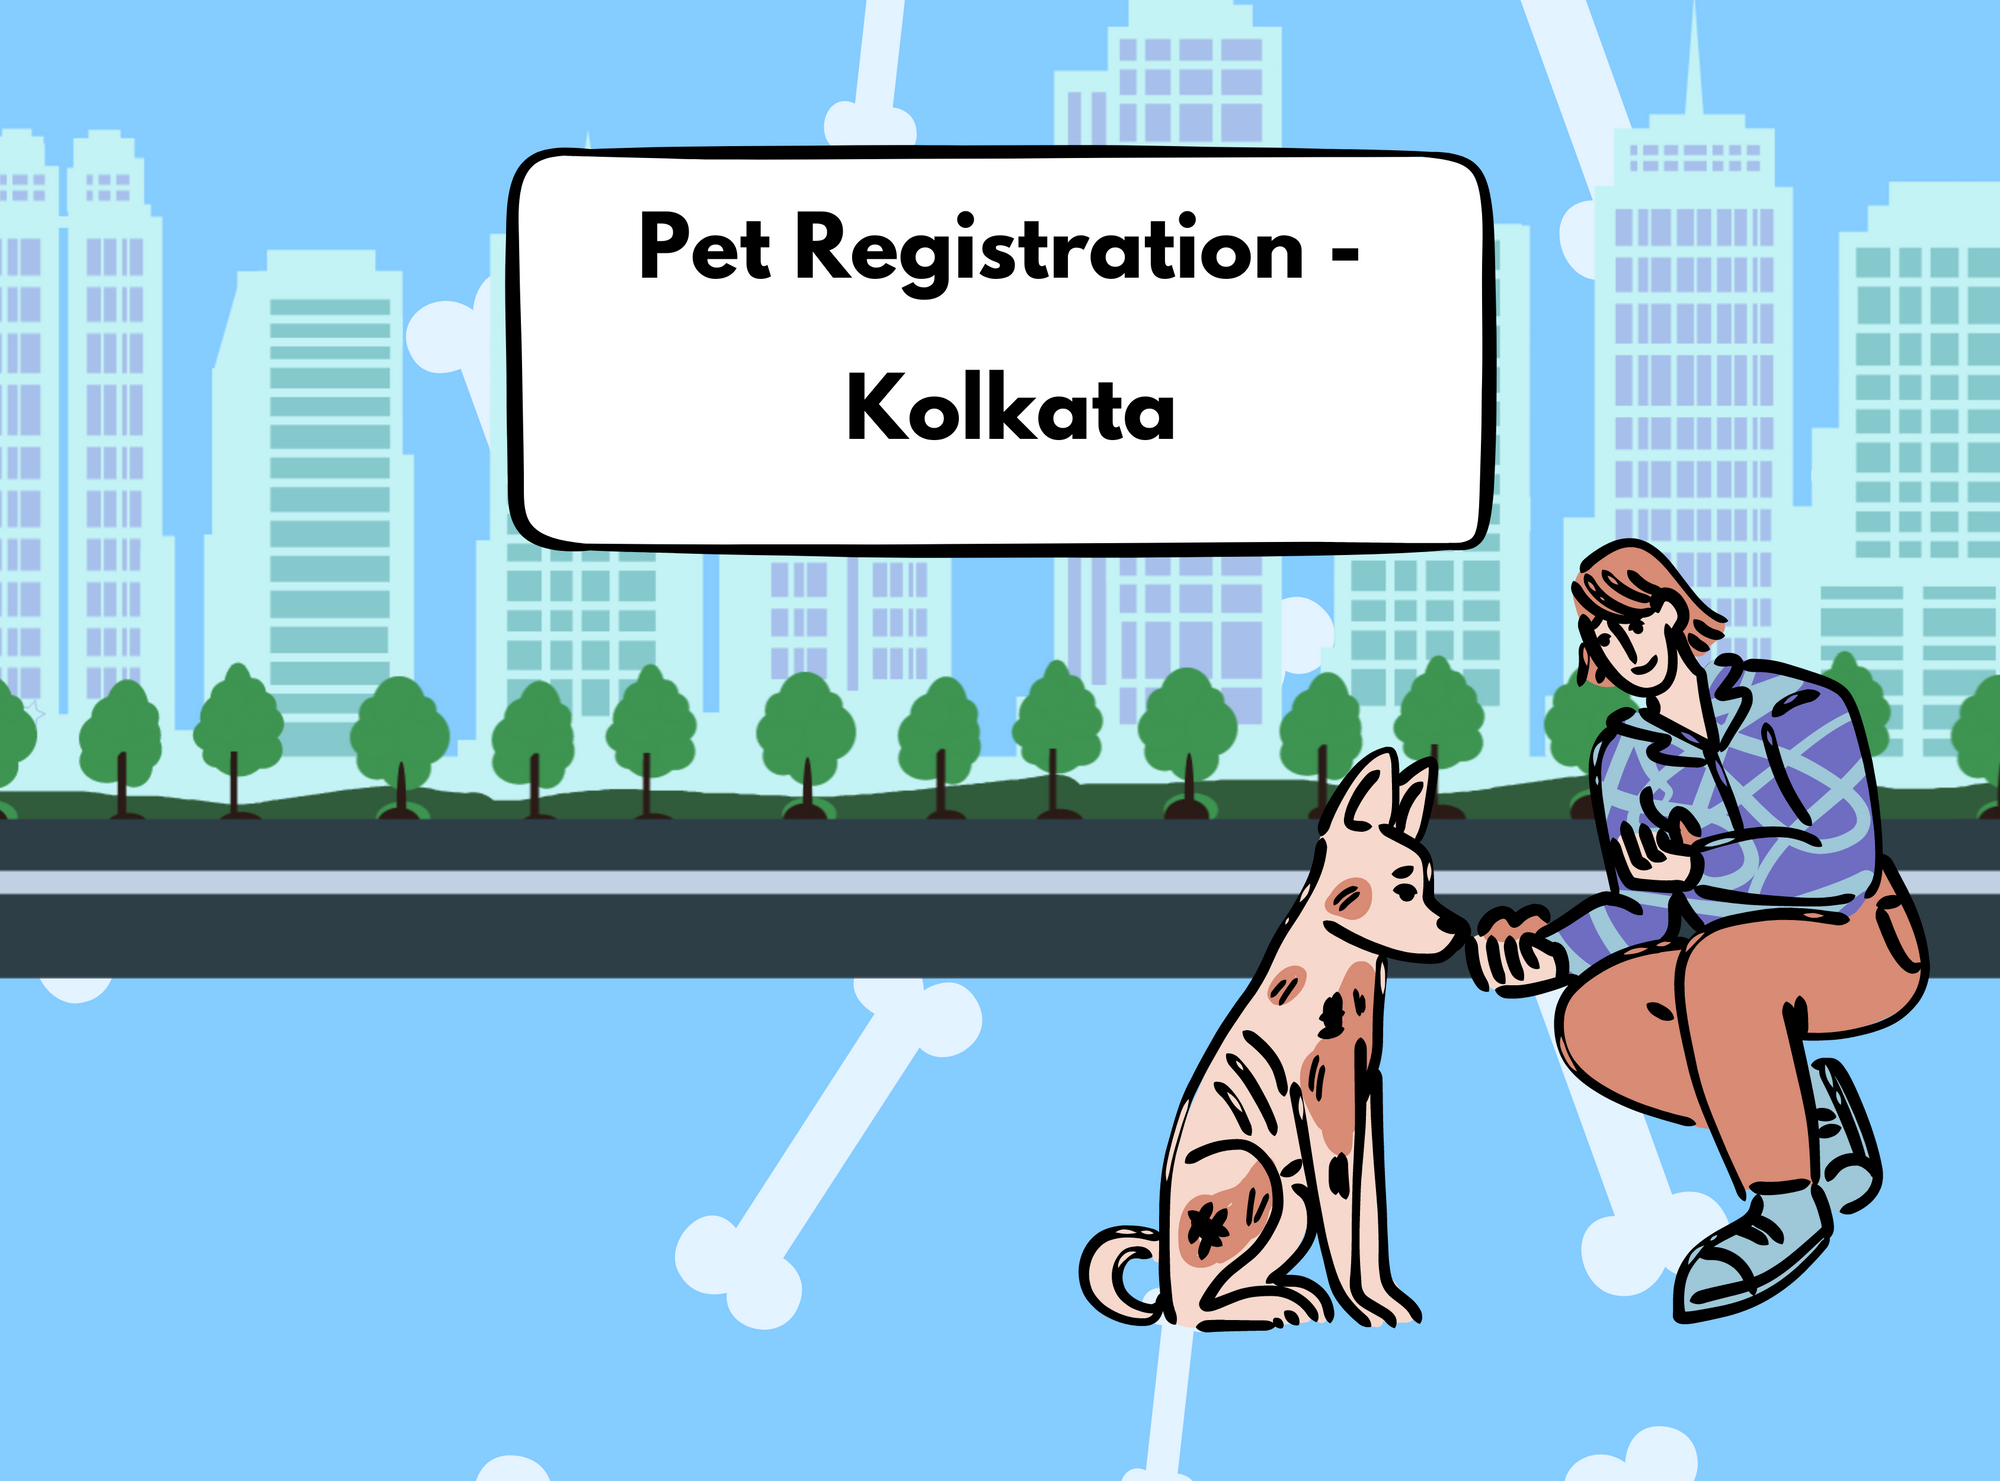 Pet registration process in Kolkata.